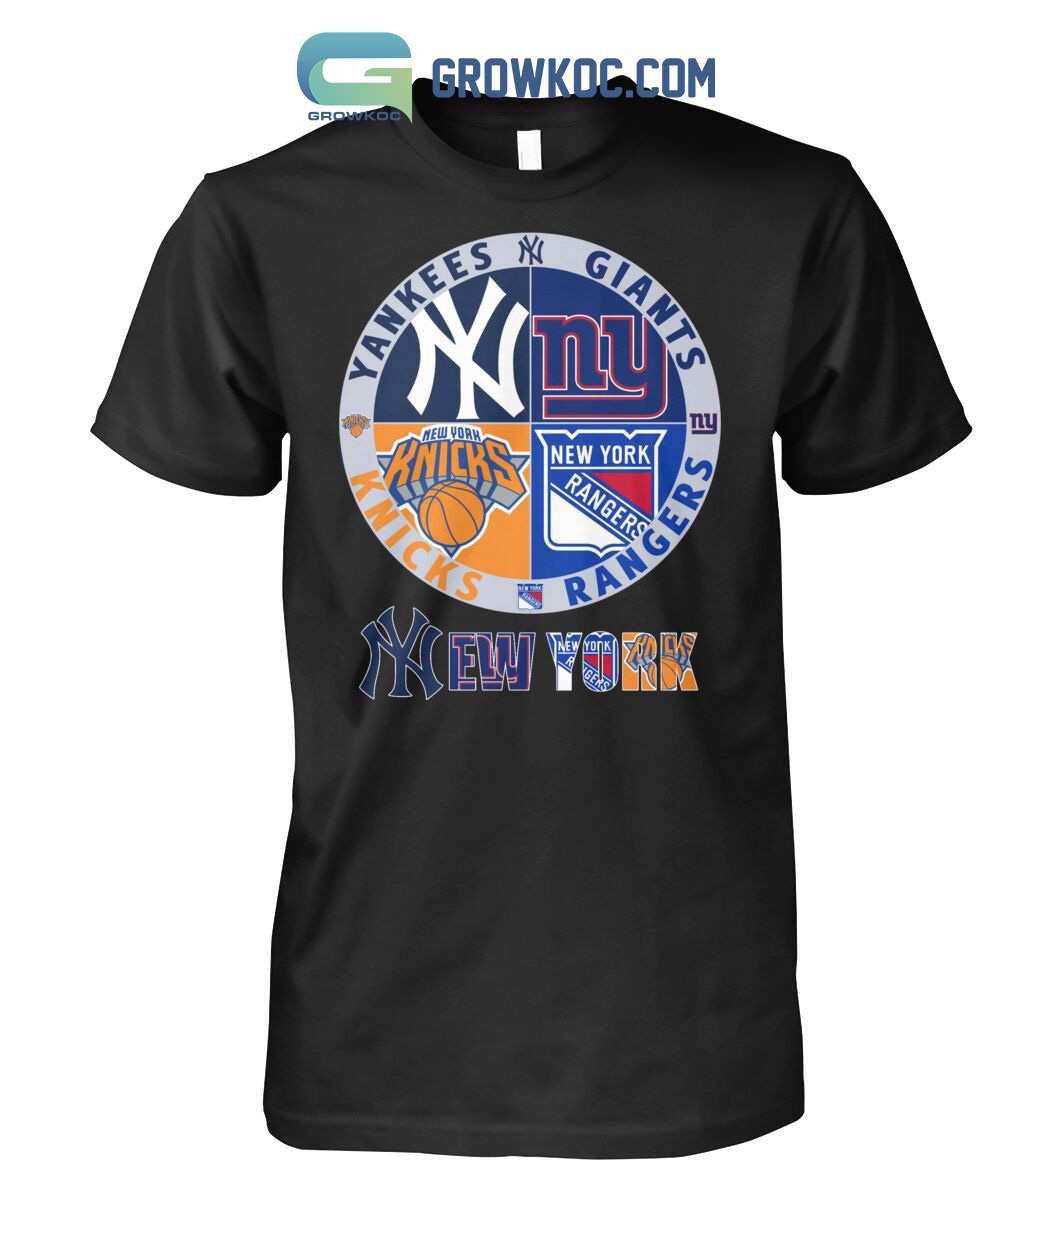 New york Yankees Giants Rangers And Knicks T Shirt